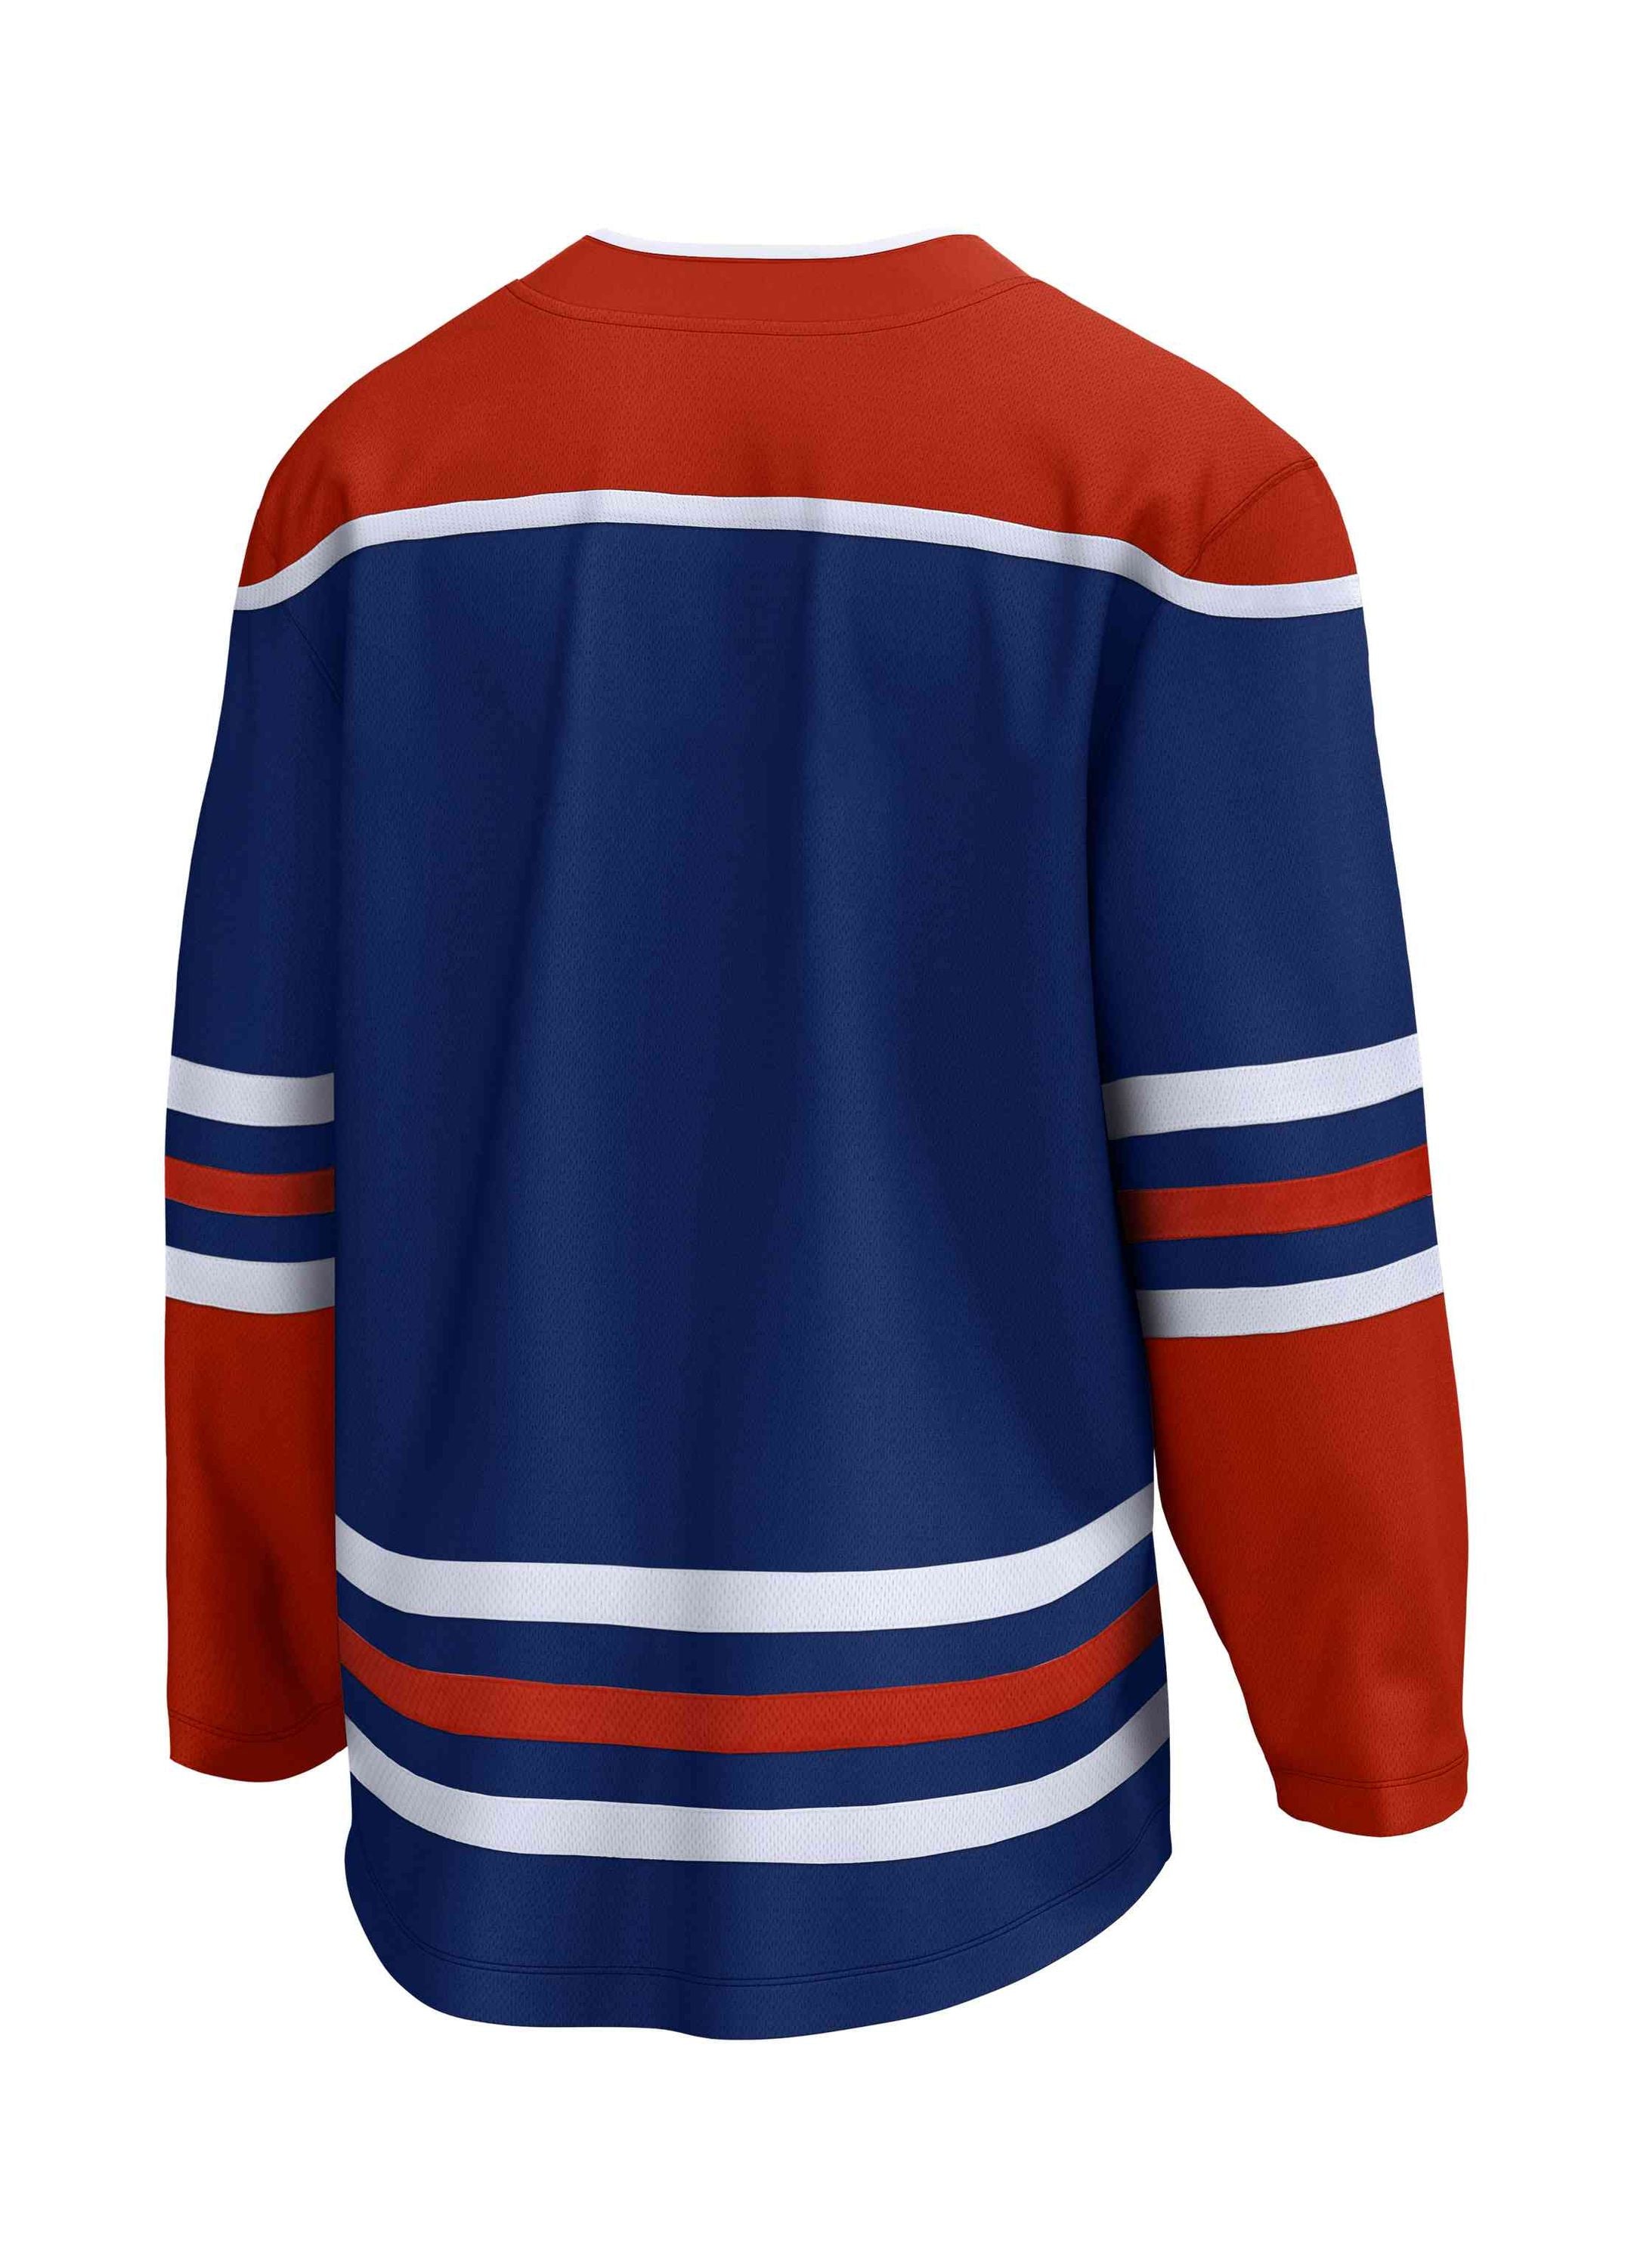 Fanatics - NHL Edmonton Oilers Breakaway Jersey Home T-Shirt